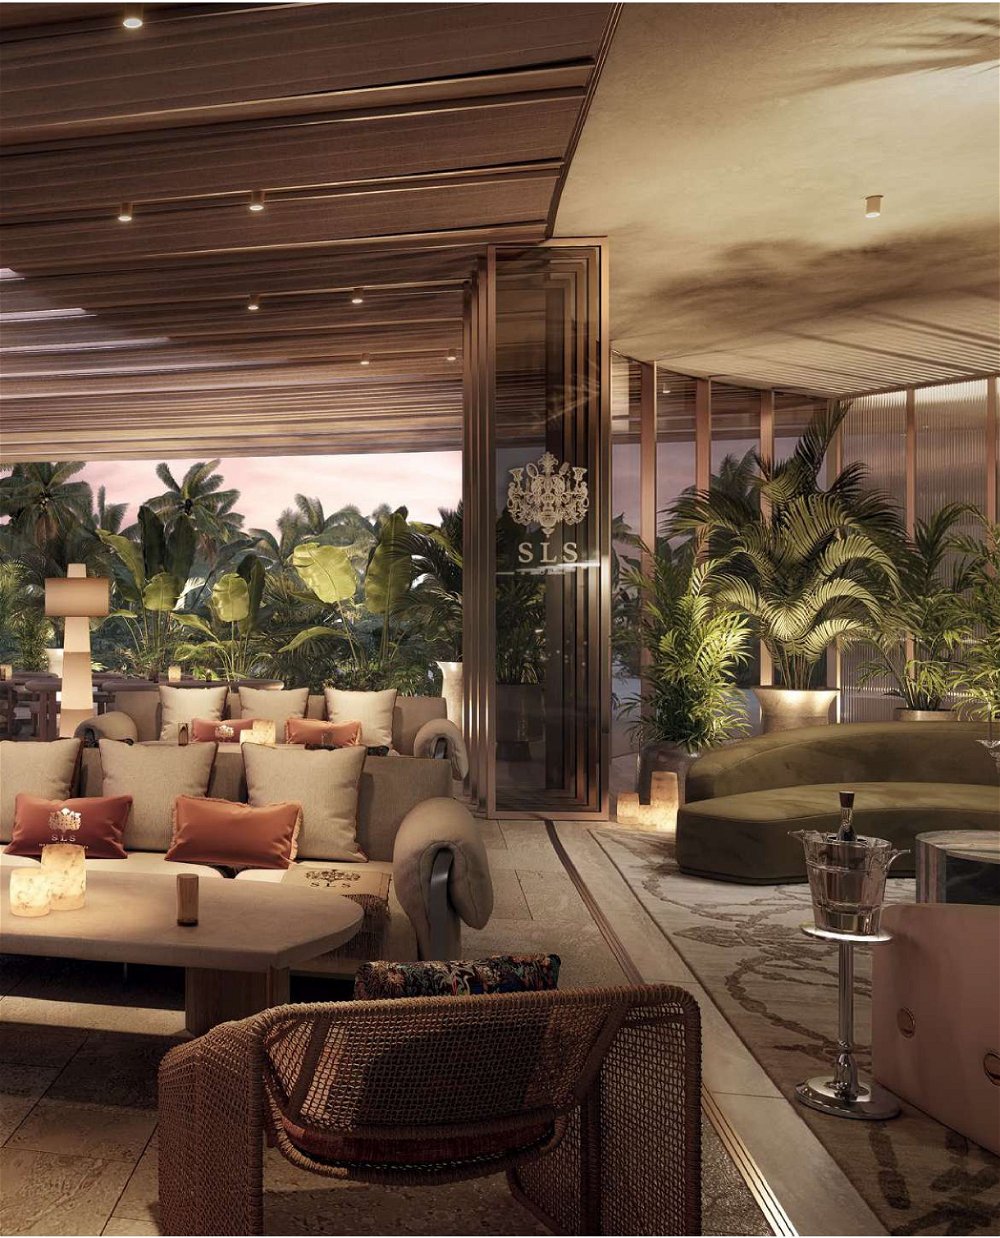 Luxury 3-bedroom beachfront simplex for sale in Dubai 4213871644